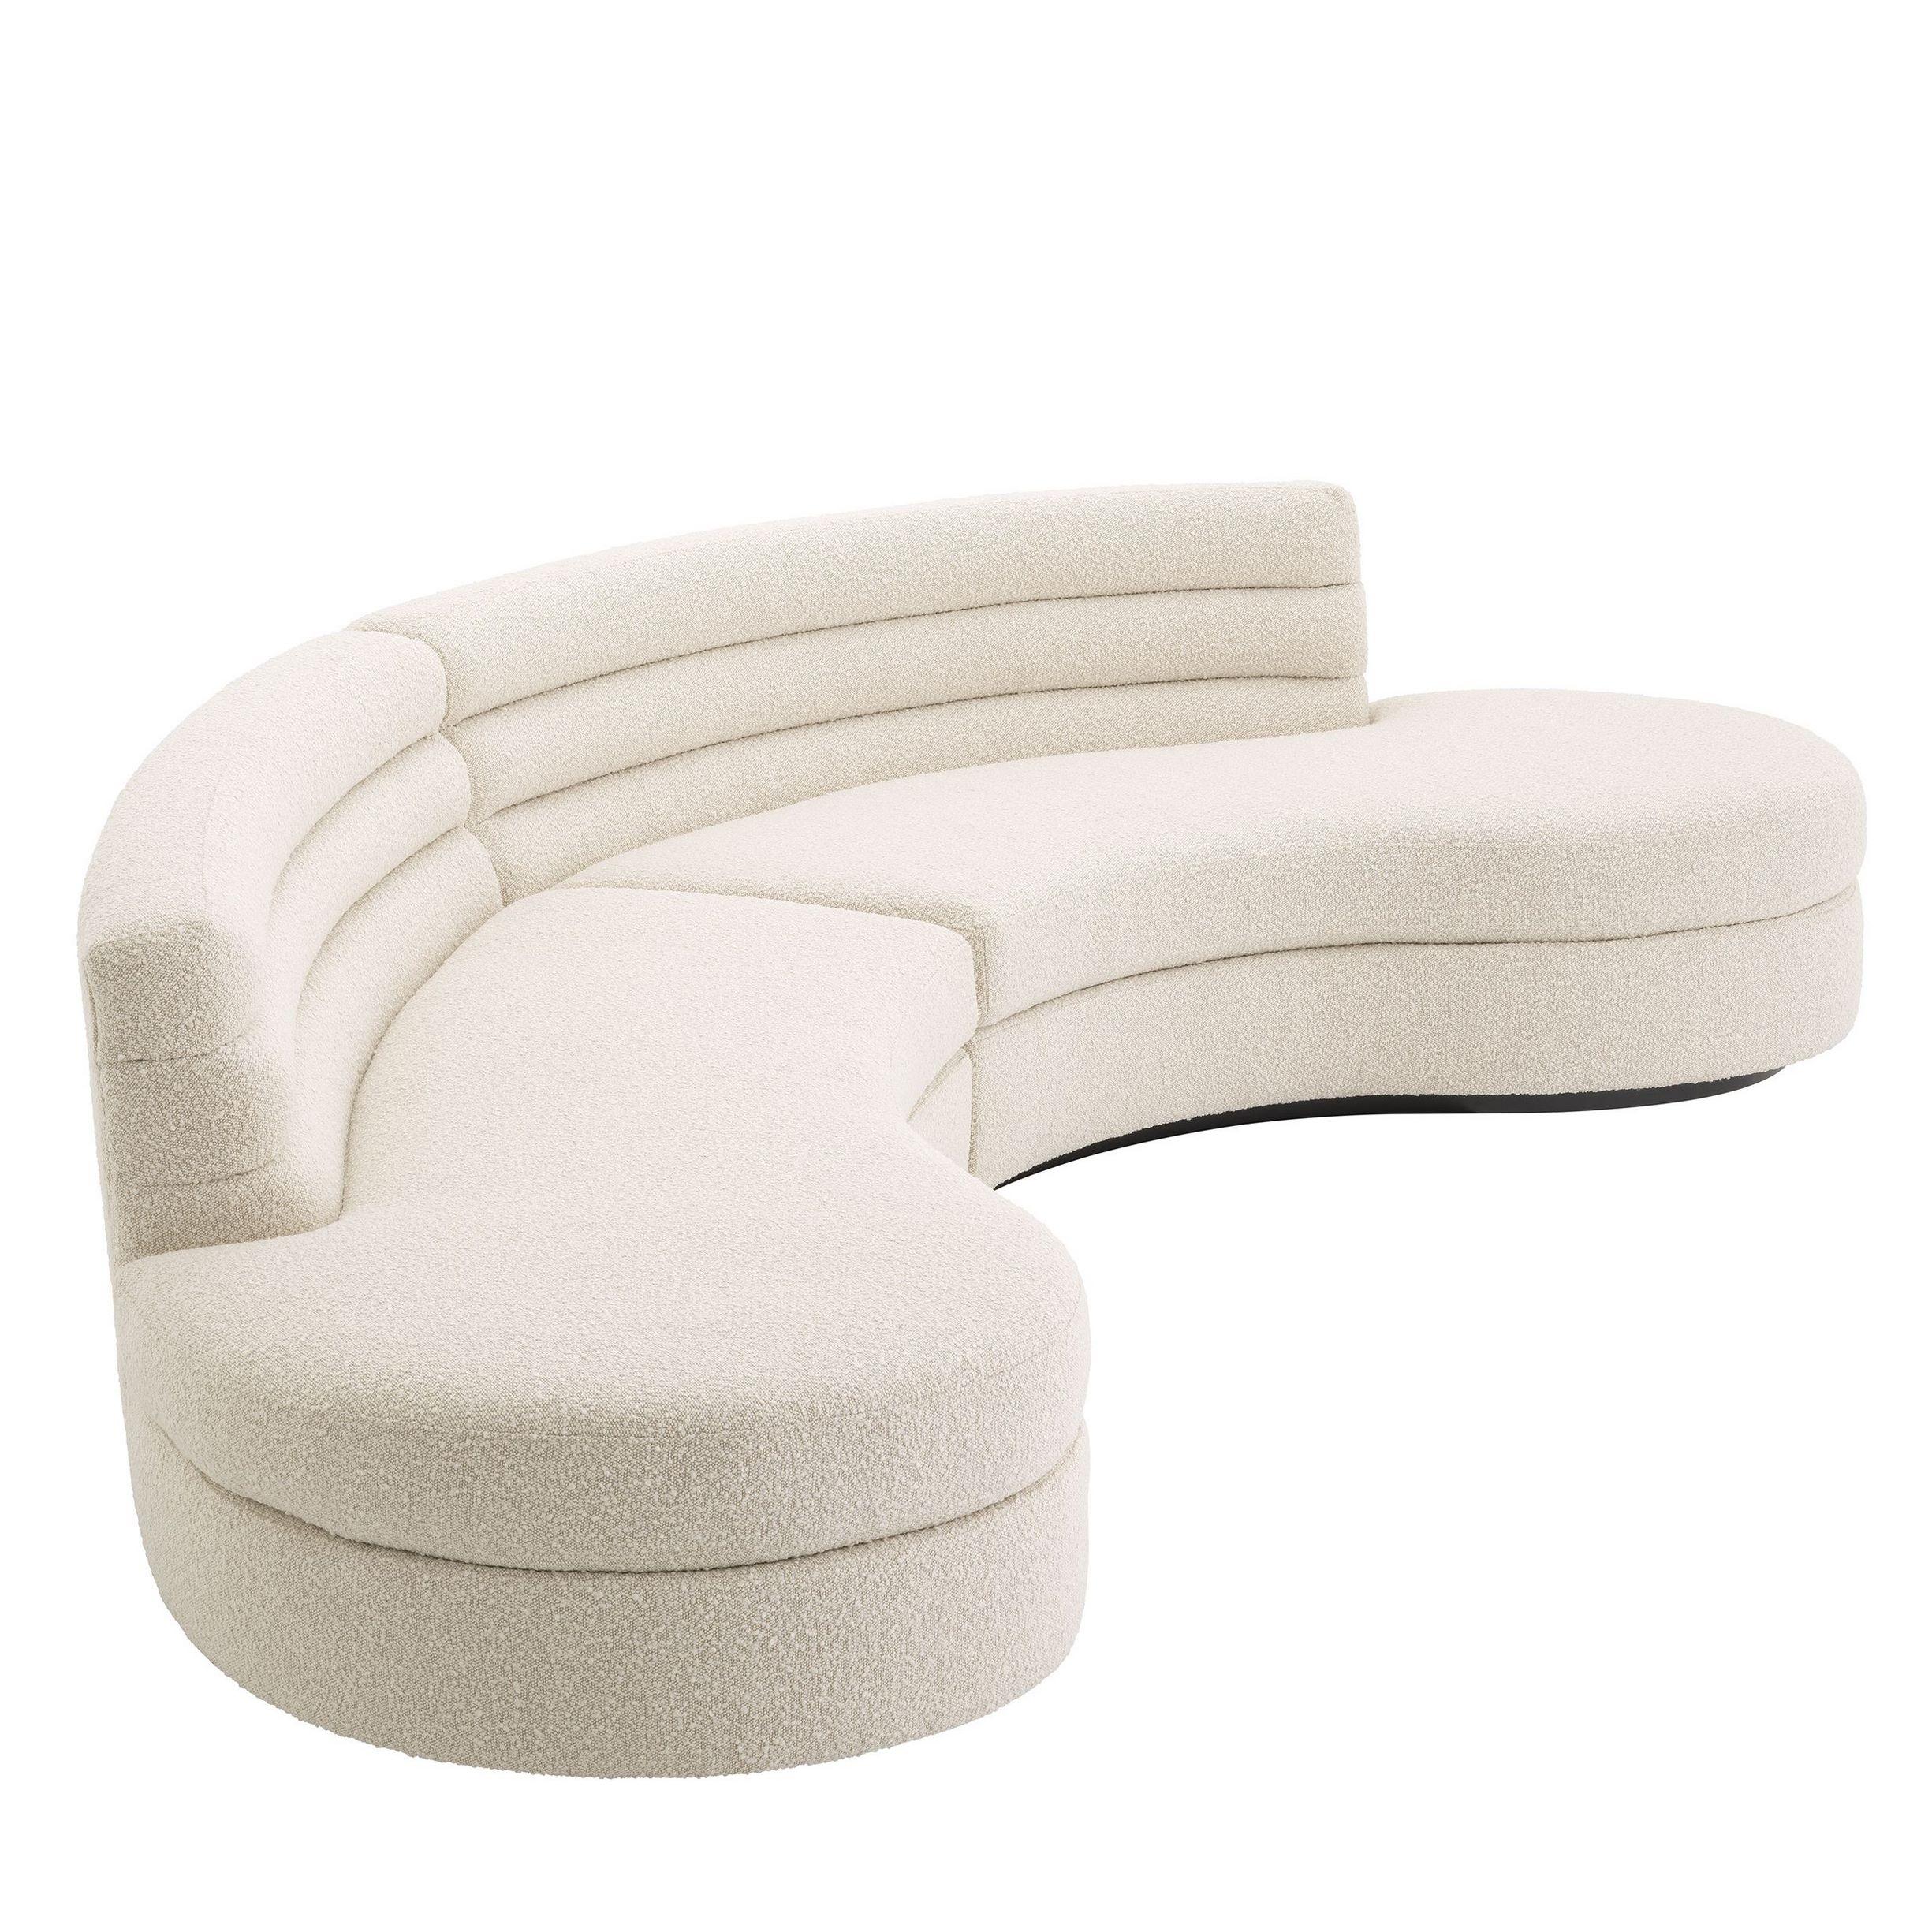 1950s Boomerang design style beige bouclé fabric curved sofa.